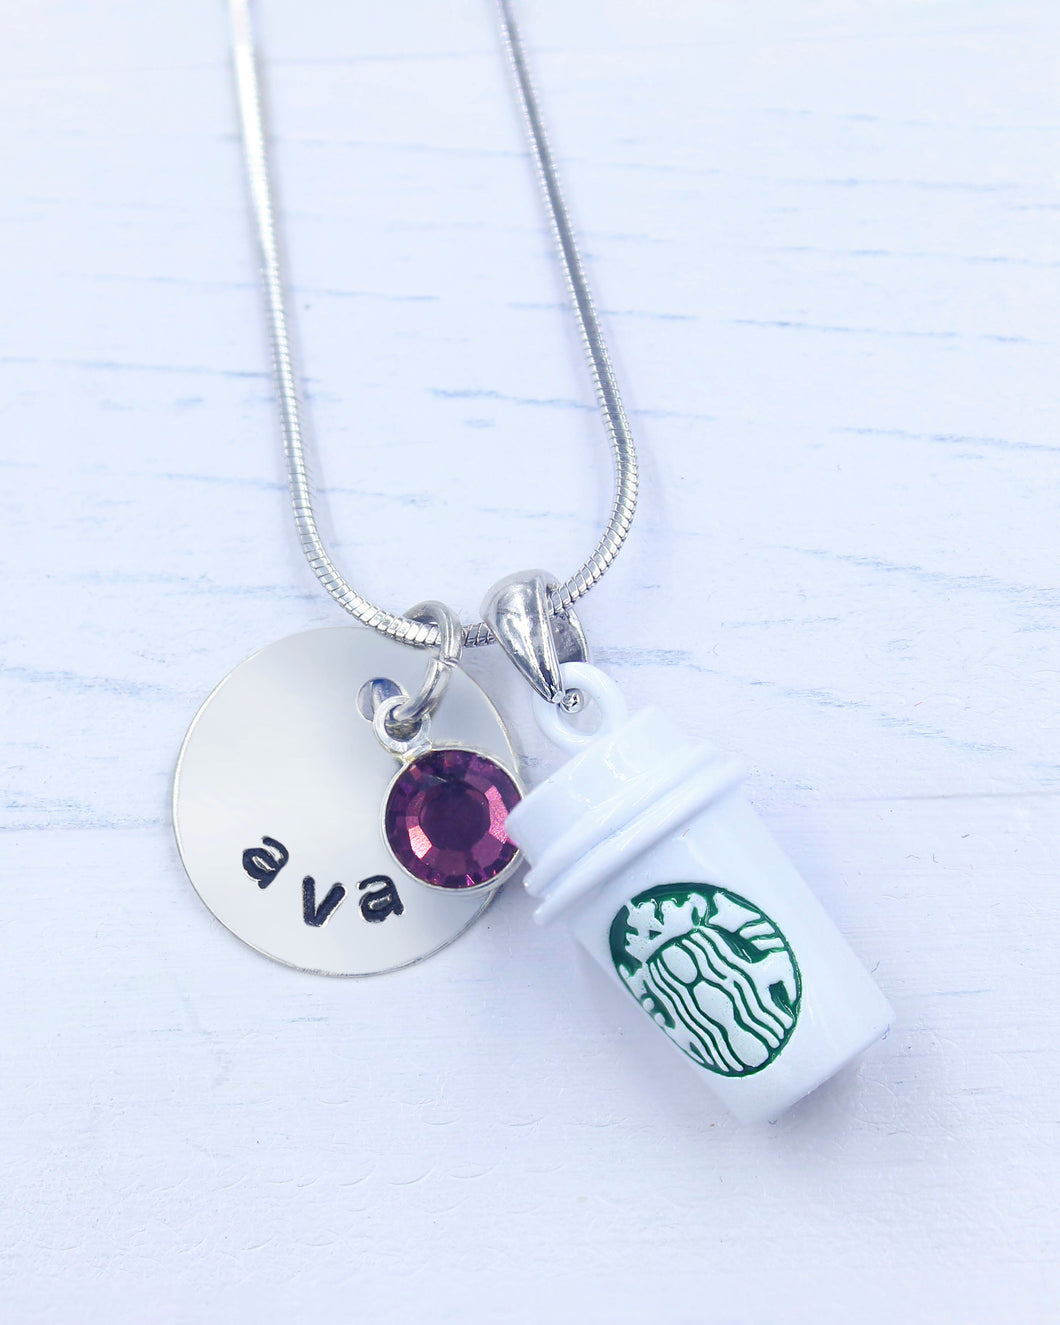 Starbucks Gift | Starbucks Necklace | Personalized Necklace | Christmas gifts for mom | Christmas gifts for her | Christmas gifts for women